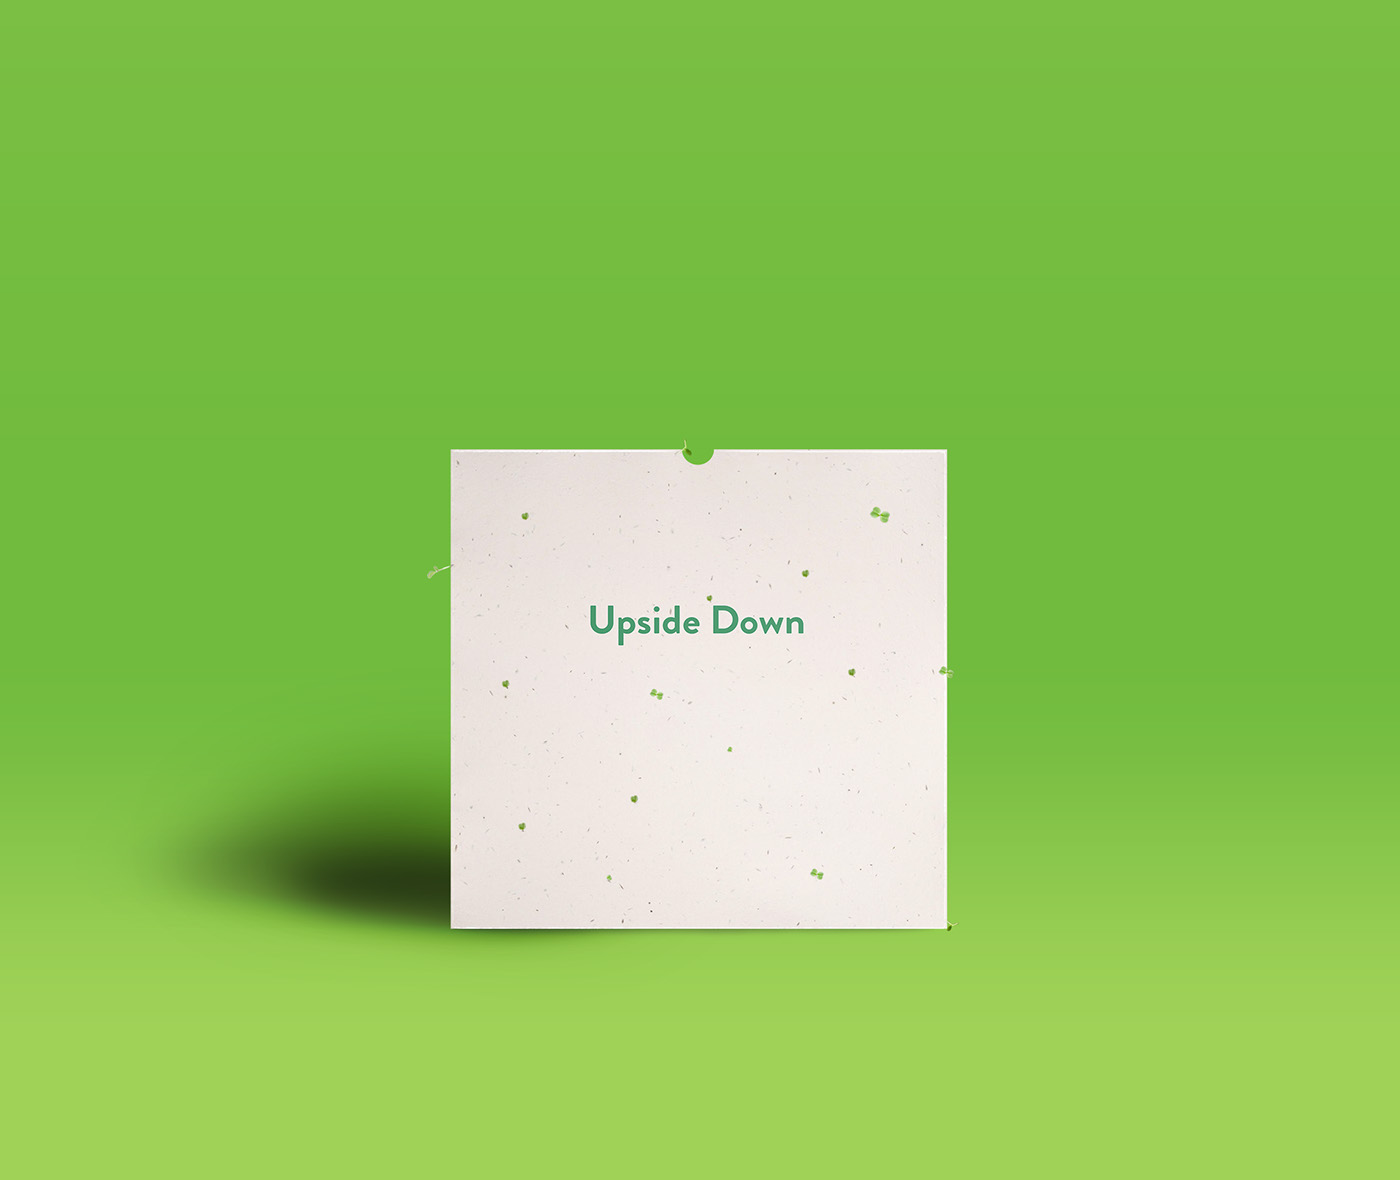 upside down Packaging Design de Embalagem mupi dandelion faith Changes comercial lenticular vinyl